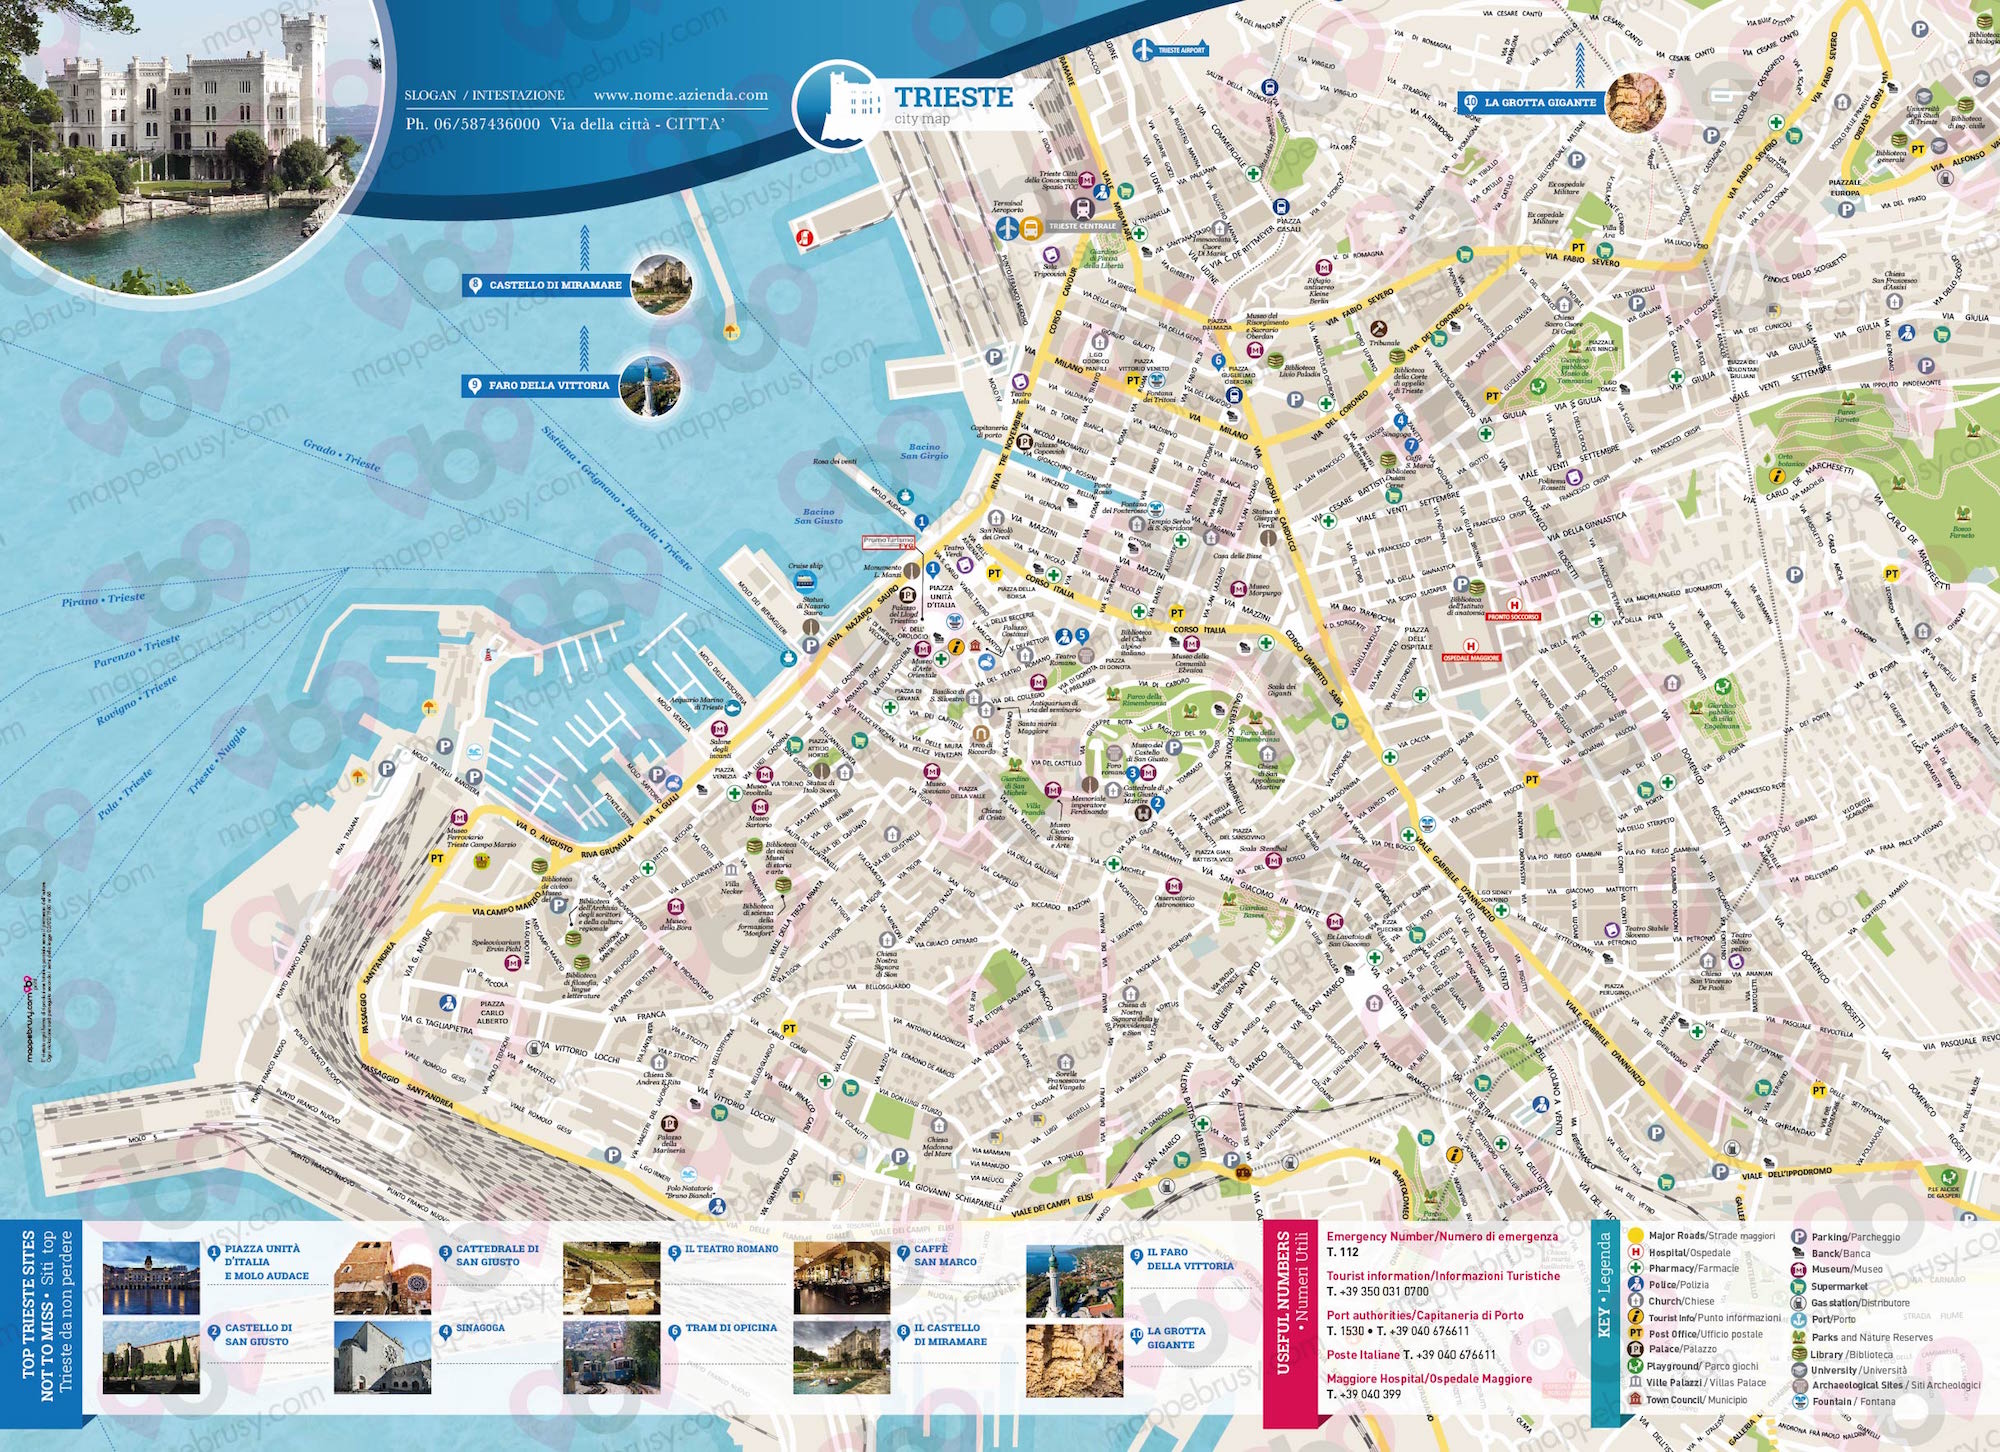 Mappa di Trieste - Trieste city map - mappa Trieste - mappa personalizzata di Trieste